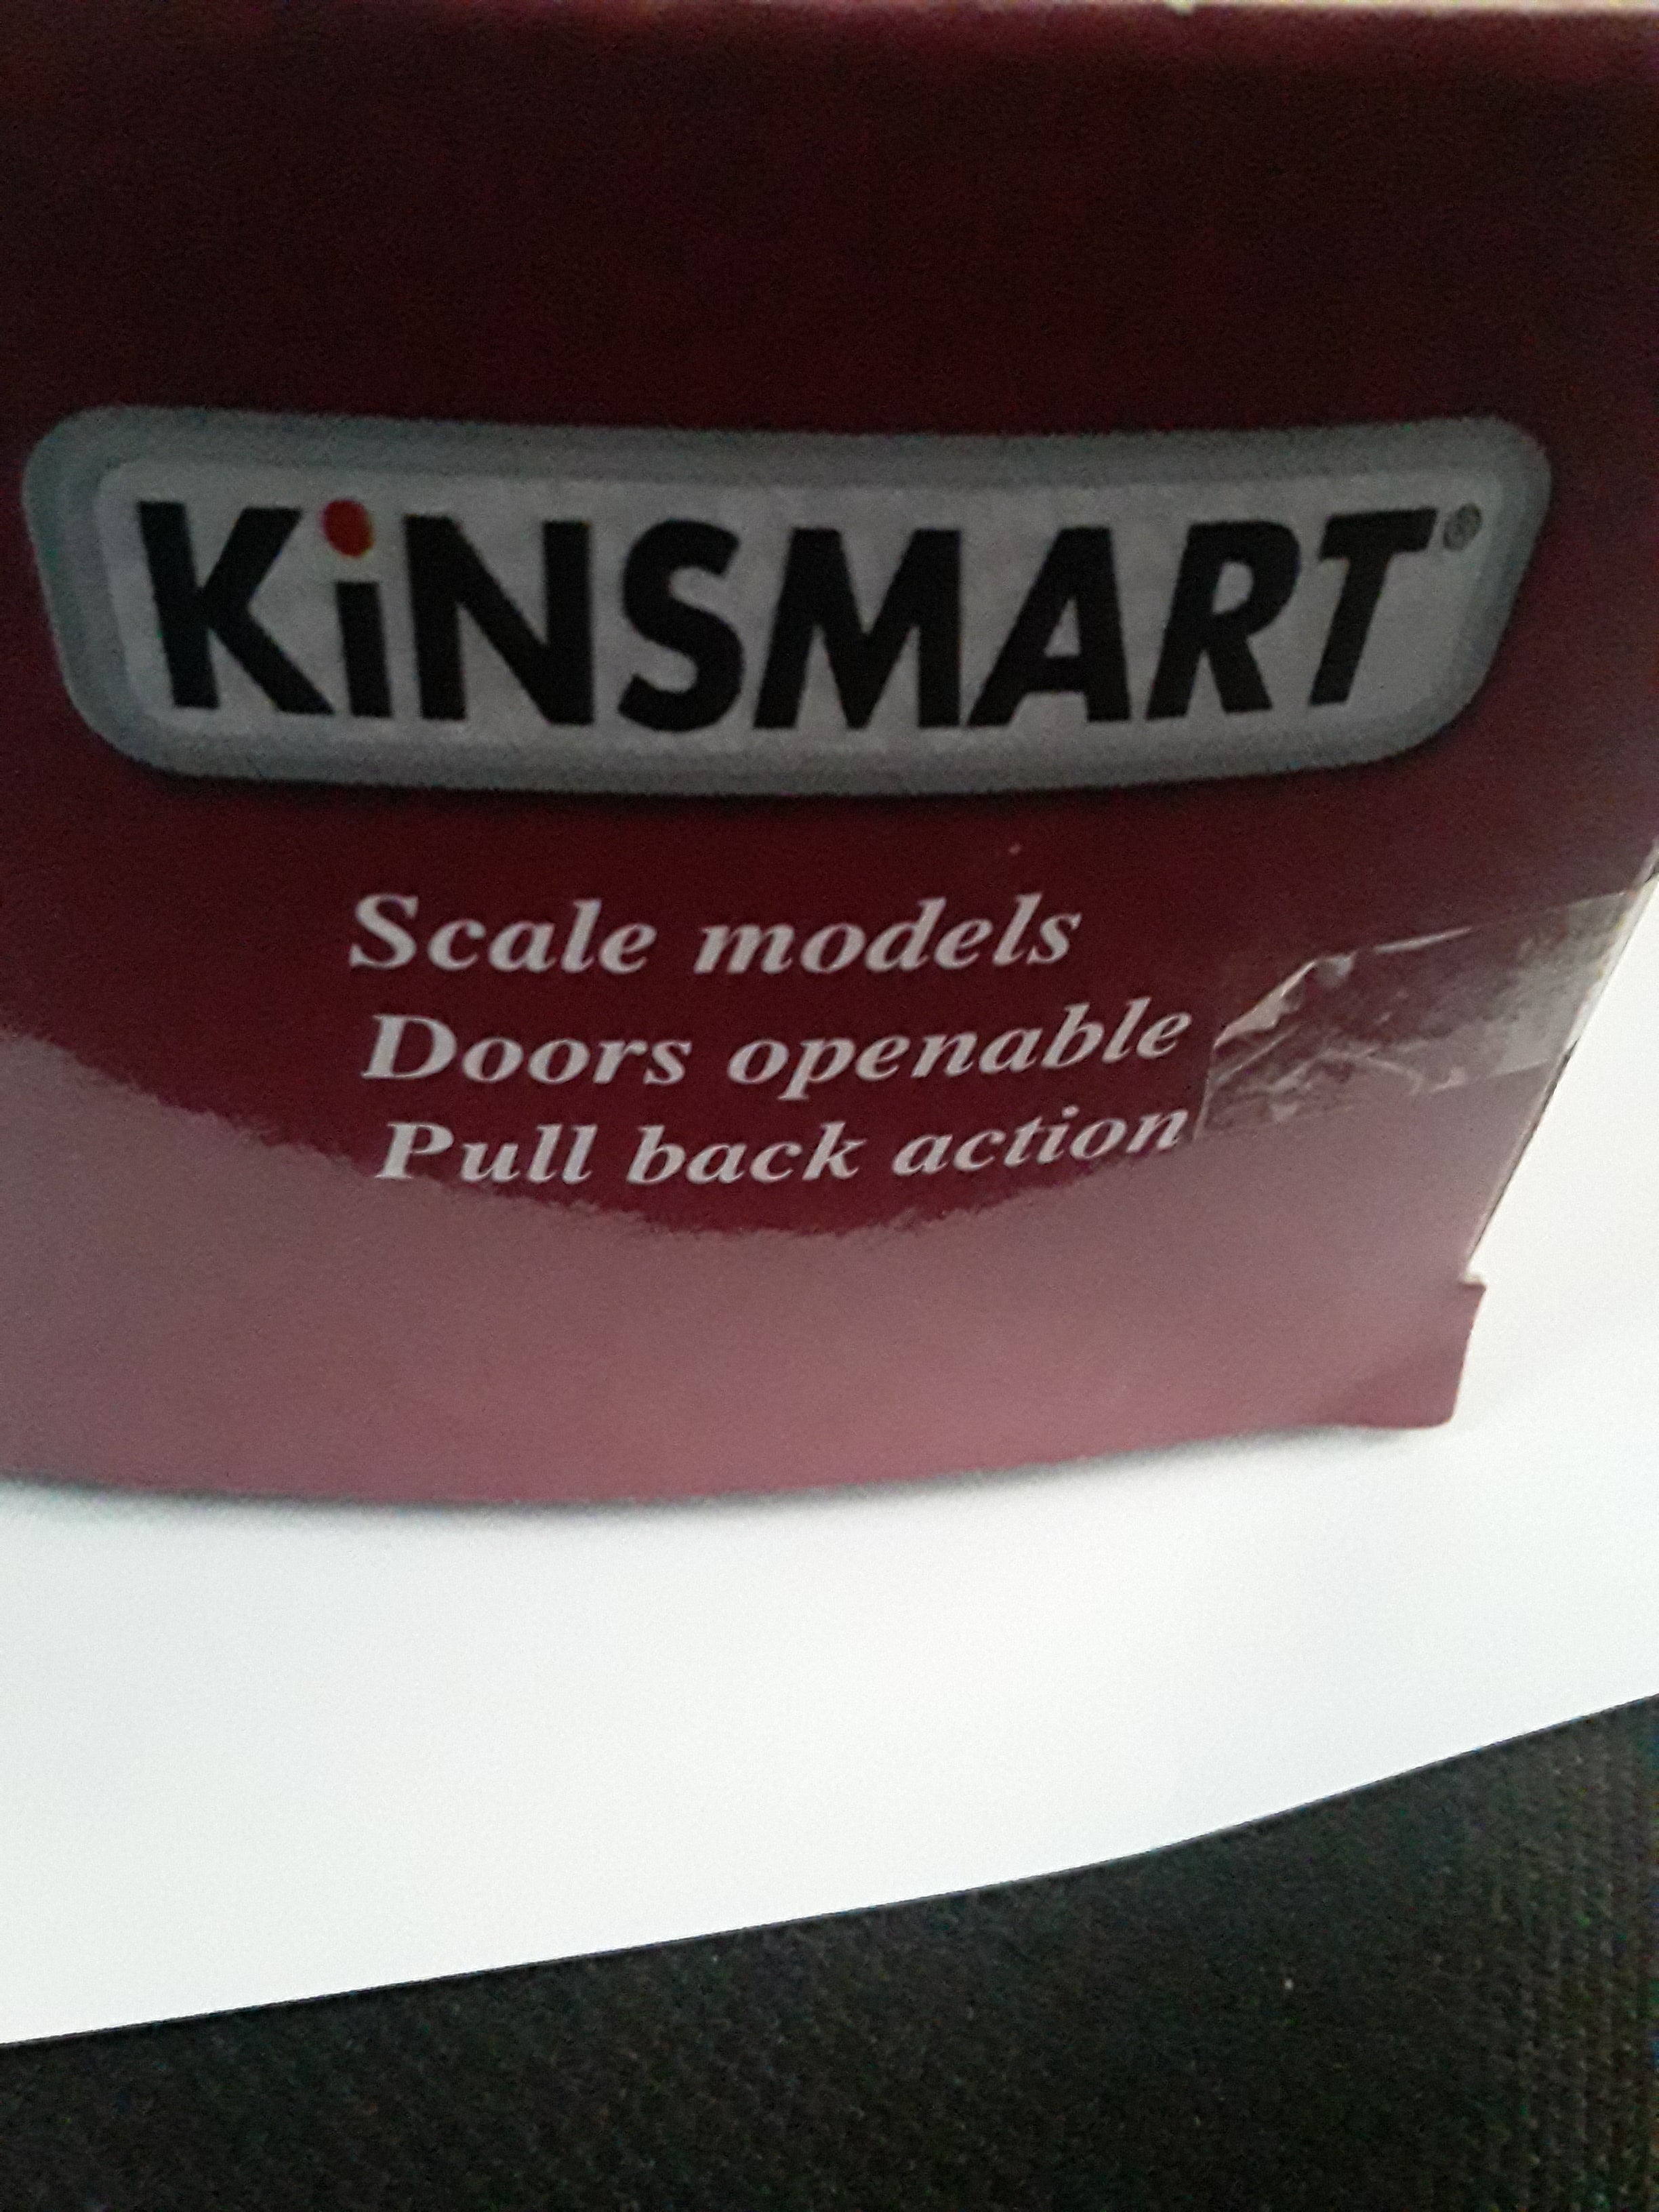 Kinsmart Car